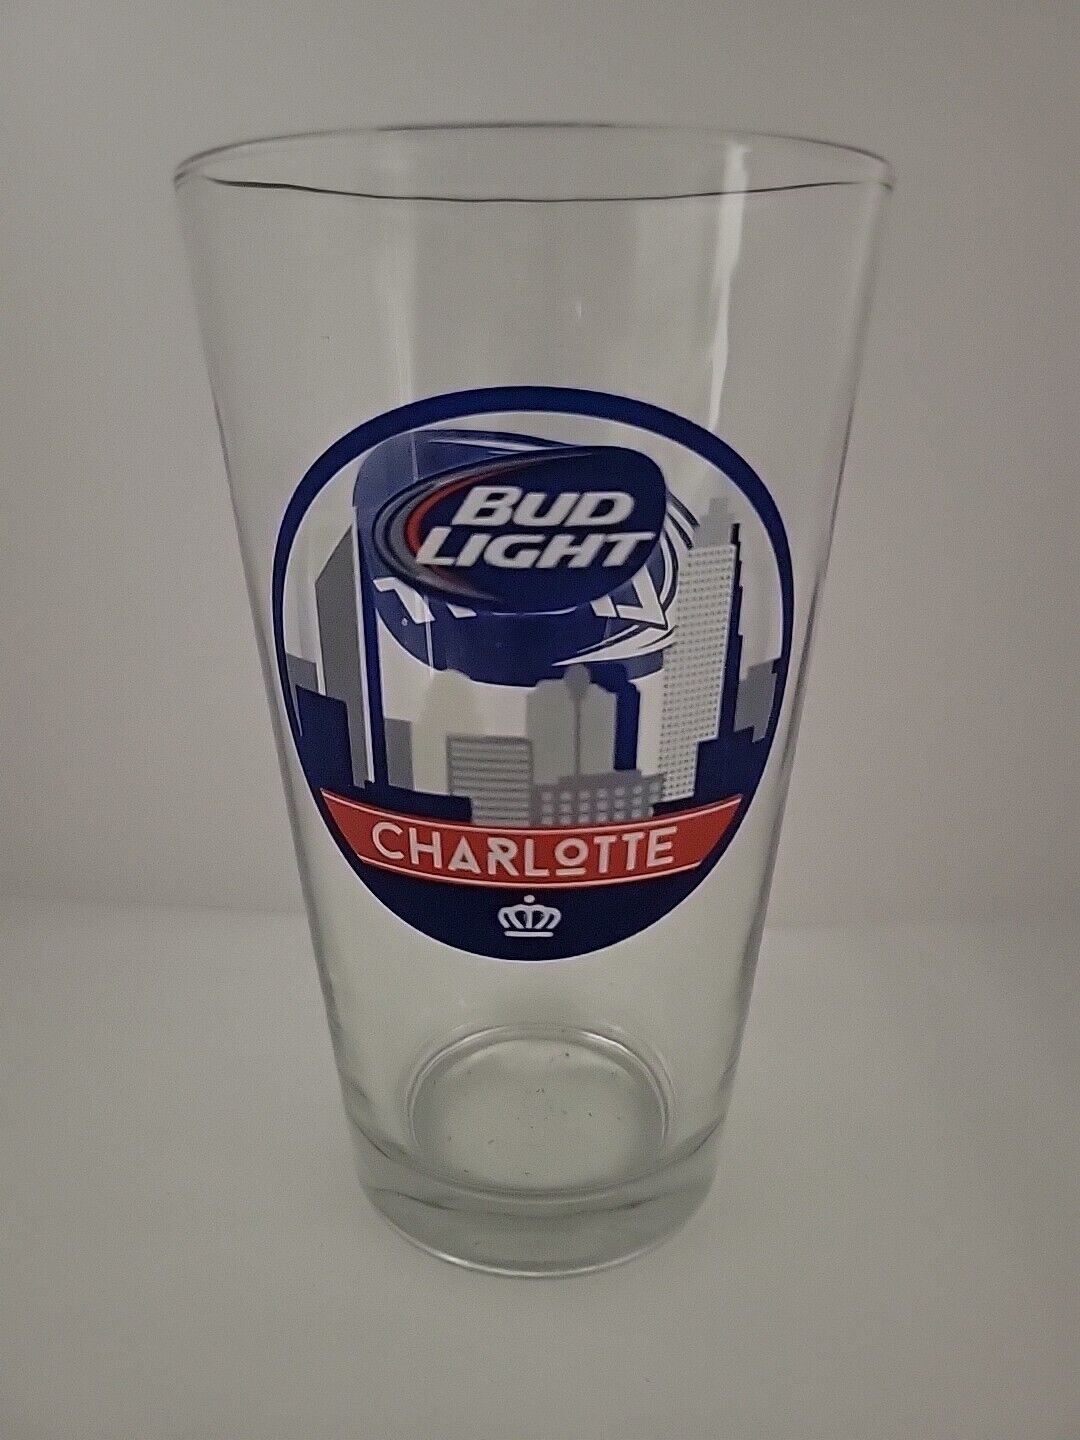 Bud Light Charlotte NC Clear Glass Pint Beer Drinking Glass Sz 16 Oz